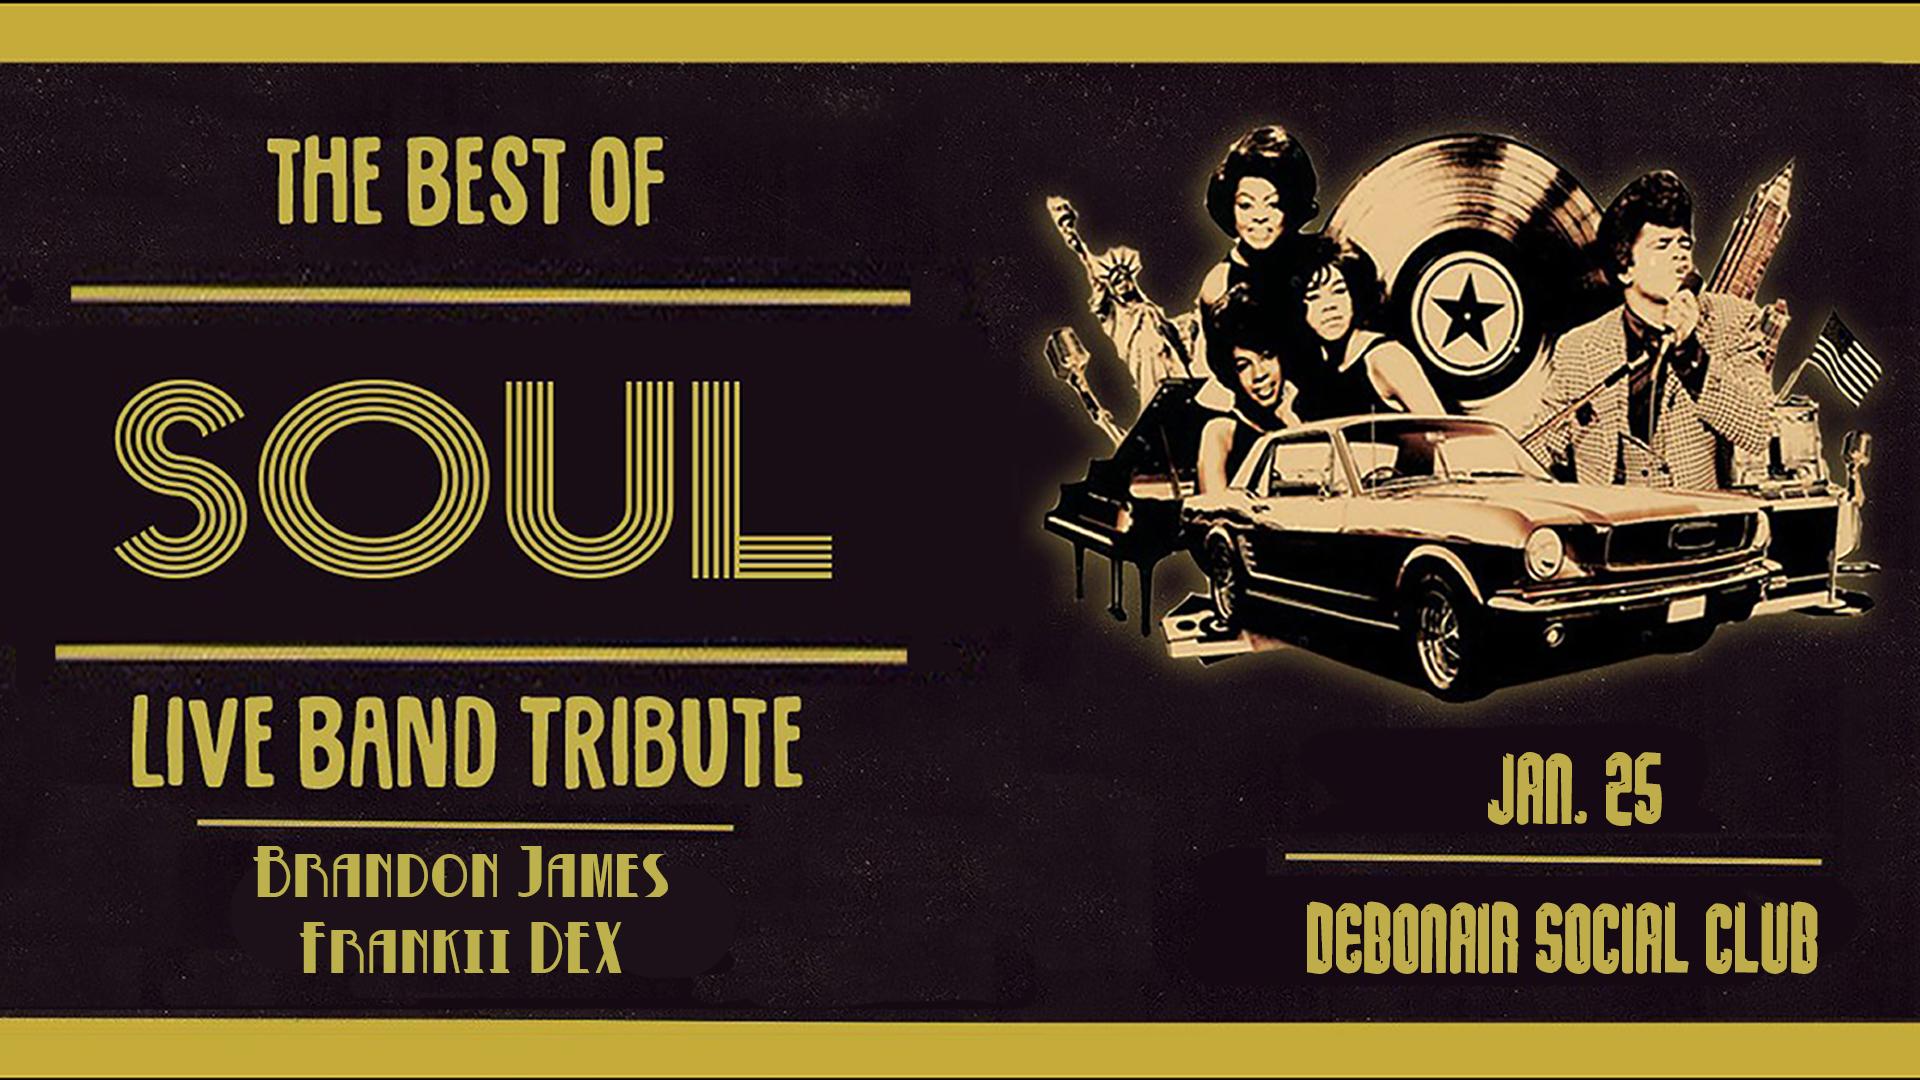 The Best of Soul: Live Band Tribute @ Debonair Social Club